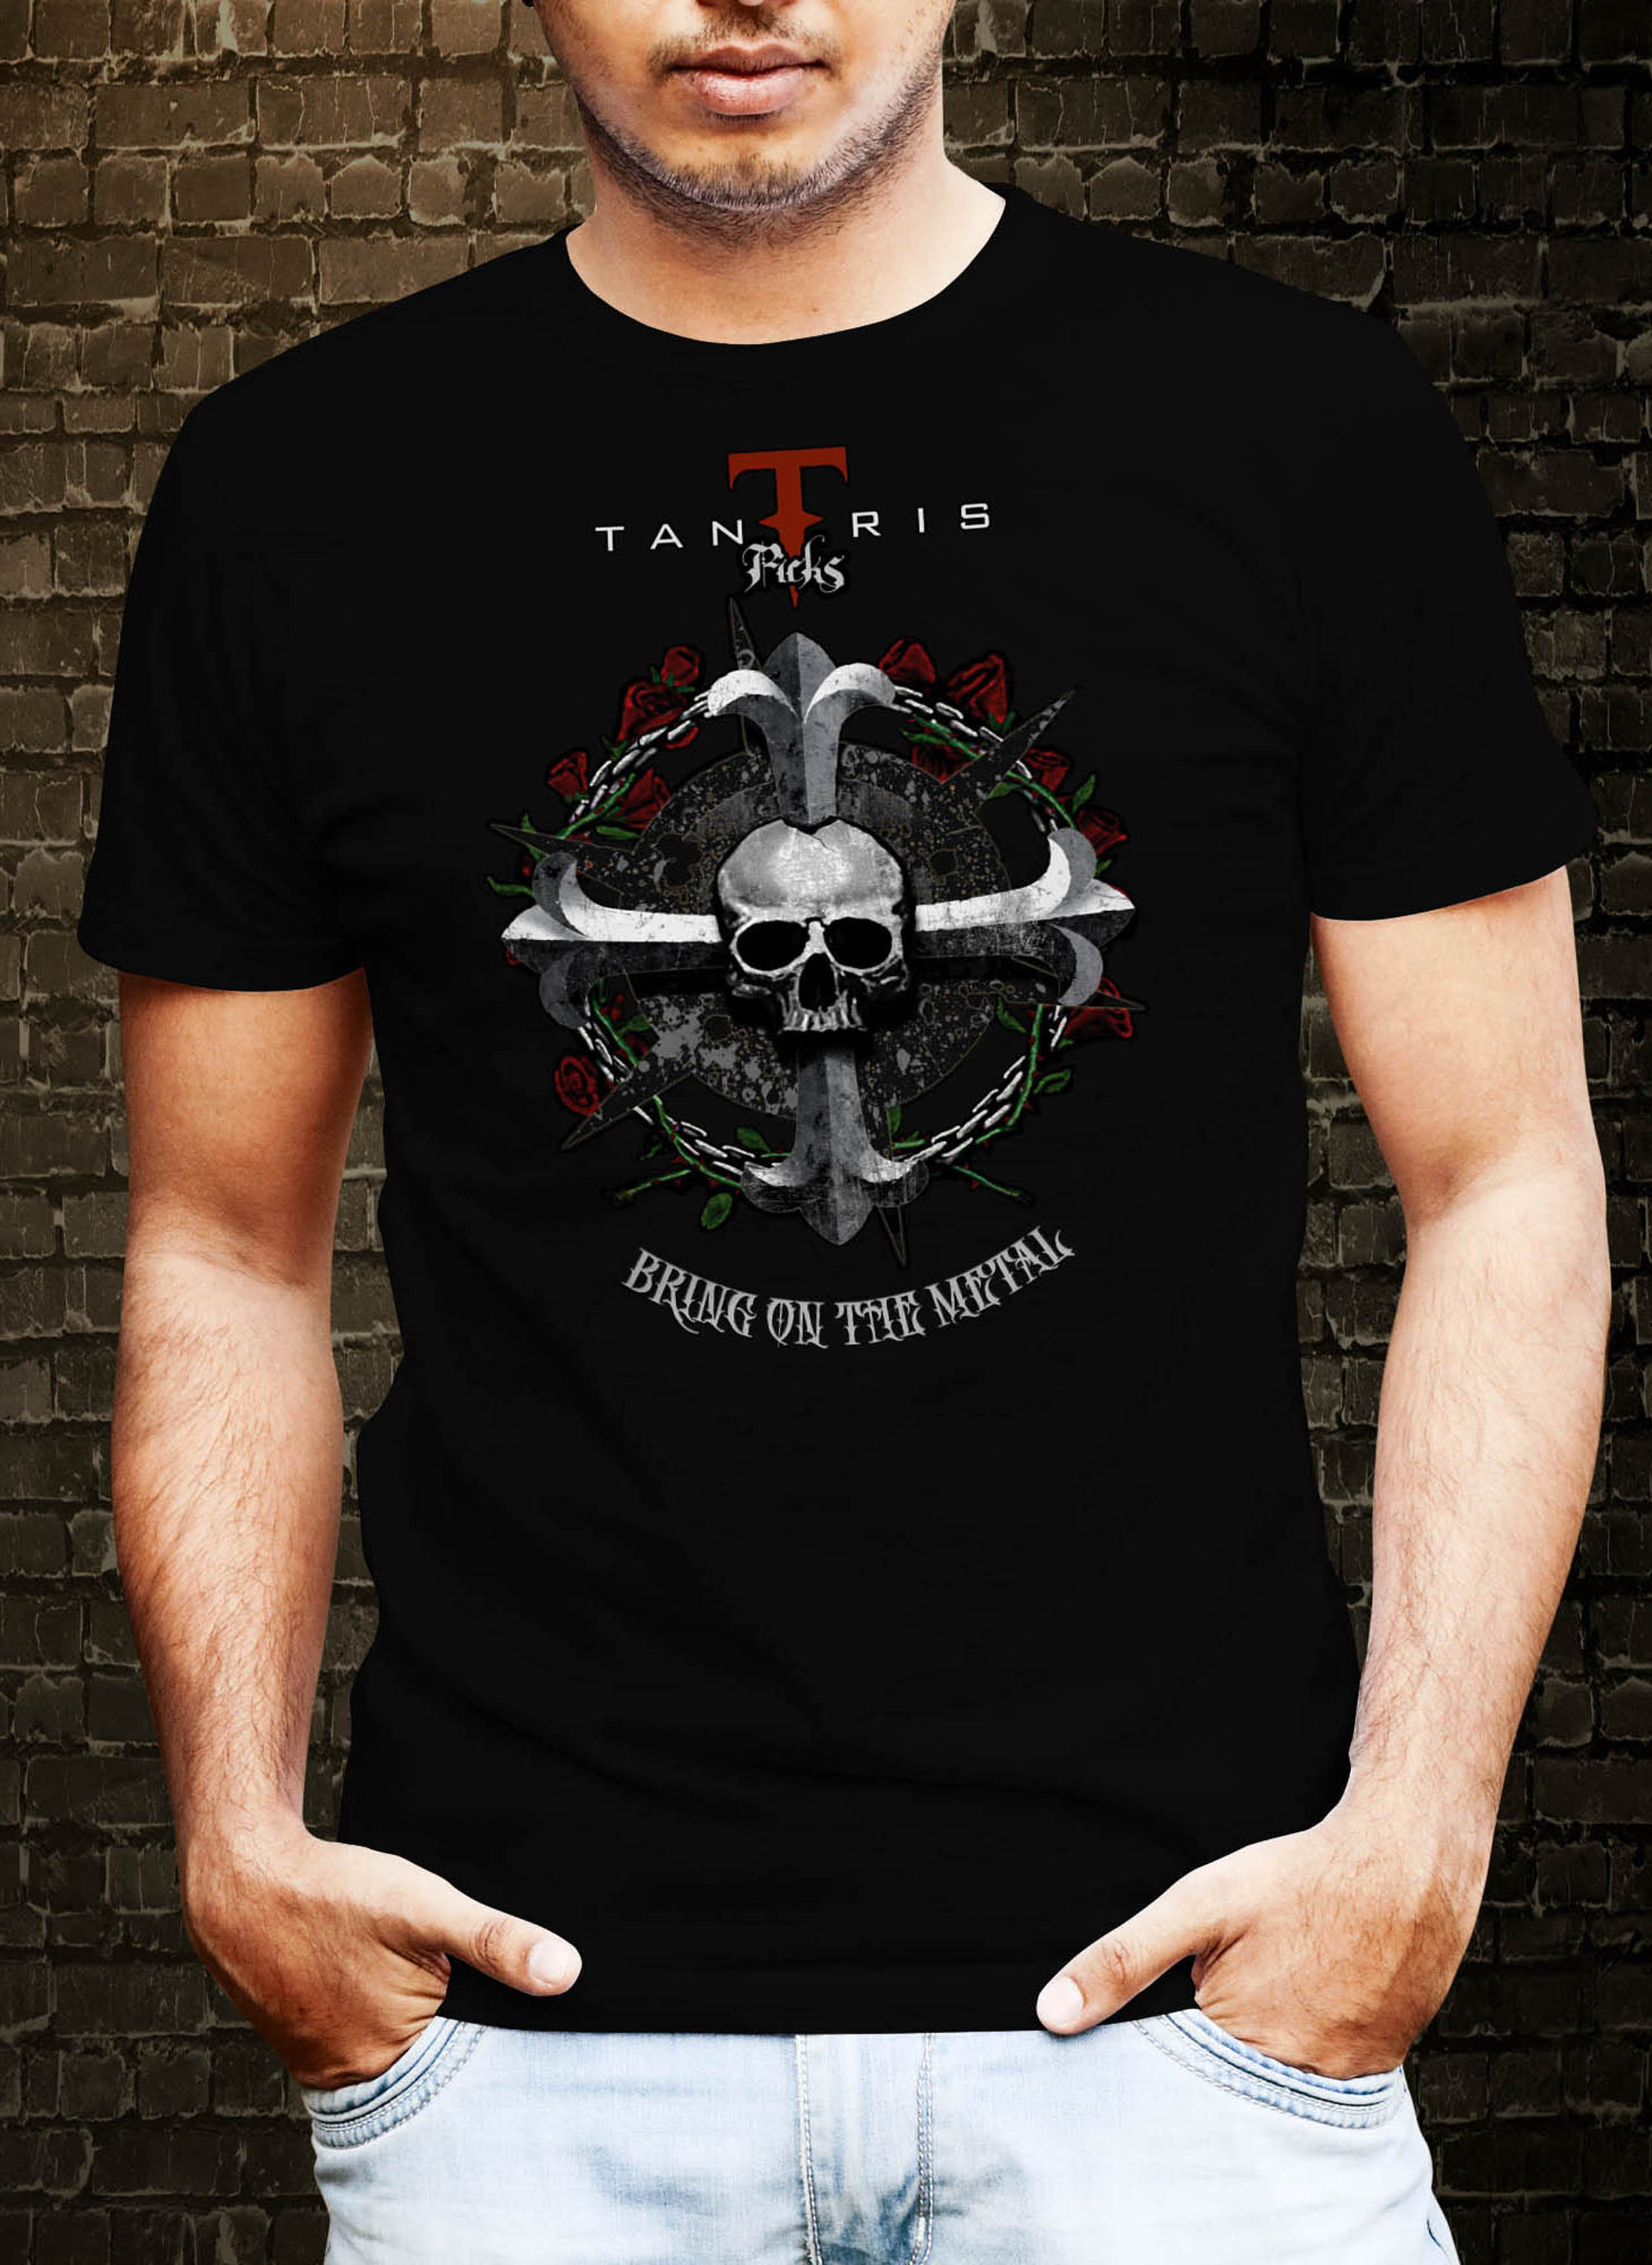 Tantris Picks T-Shirt No. 02